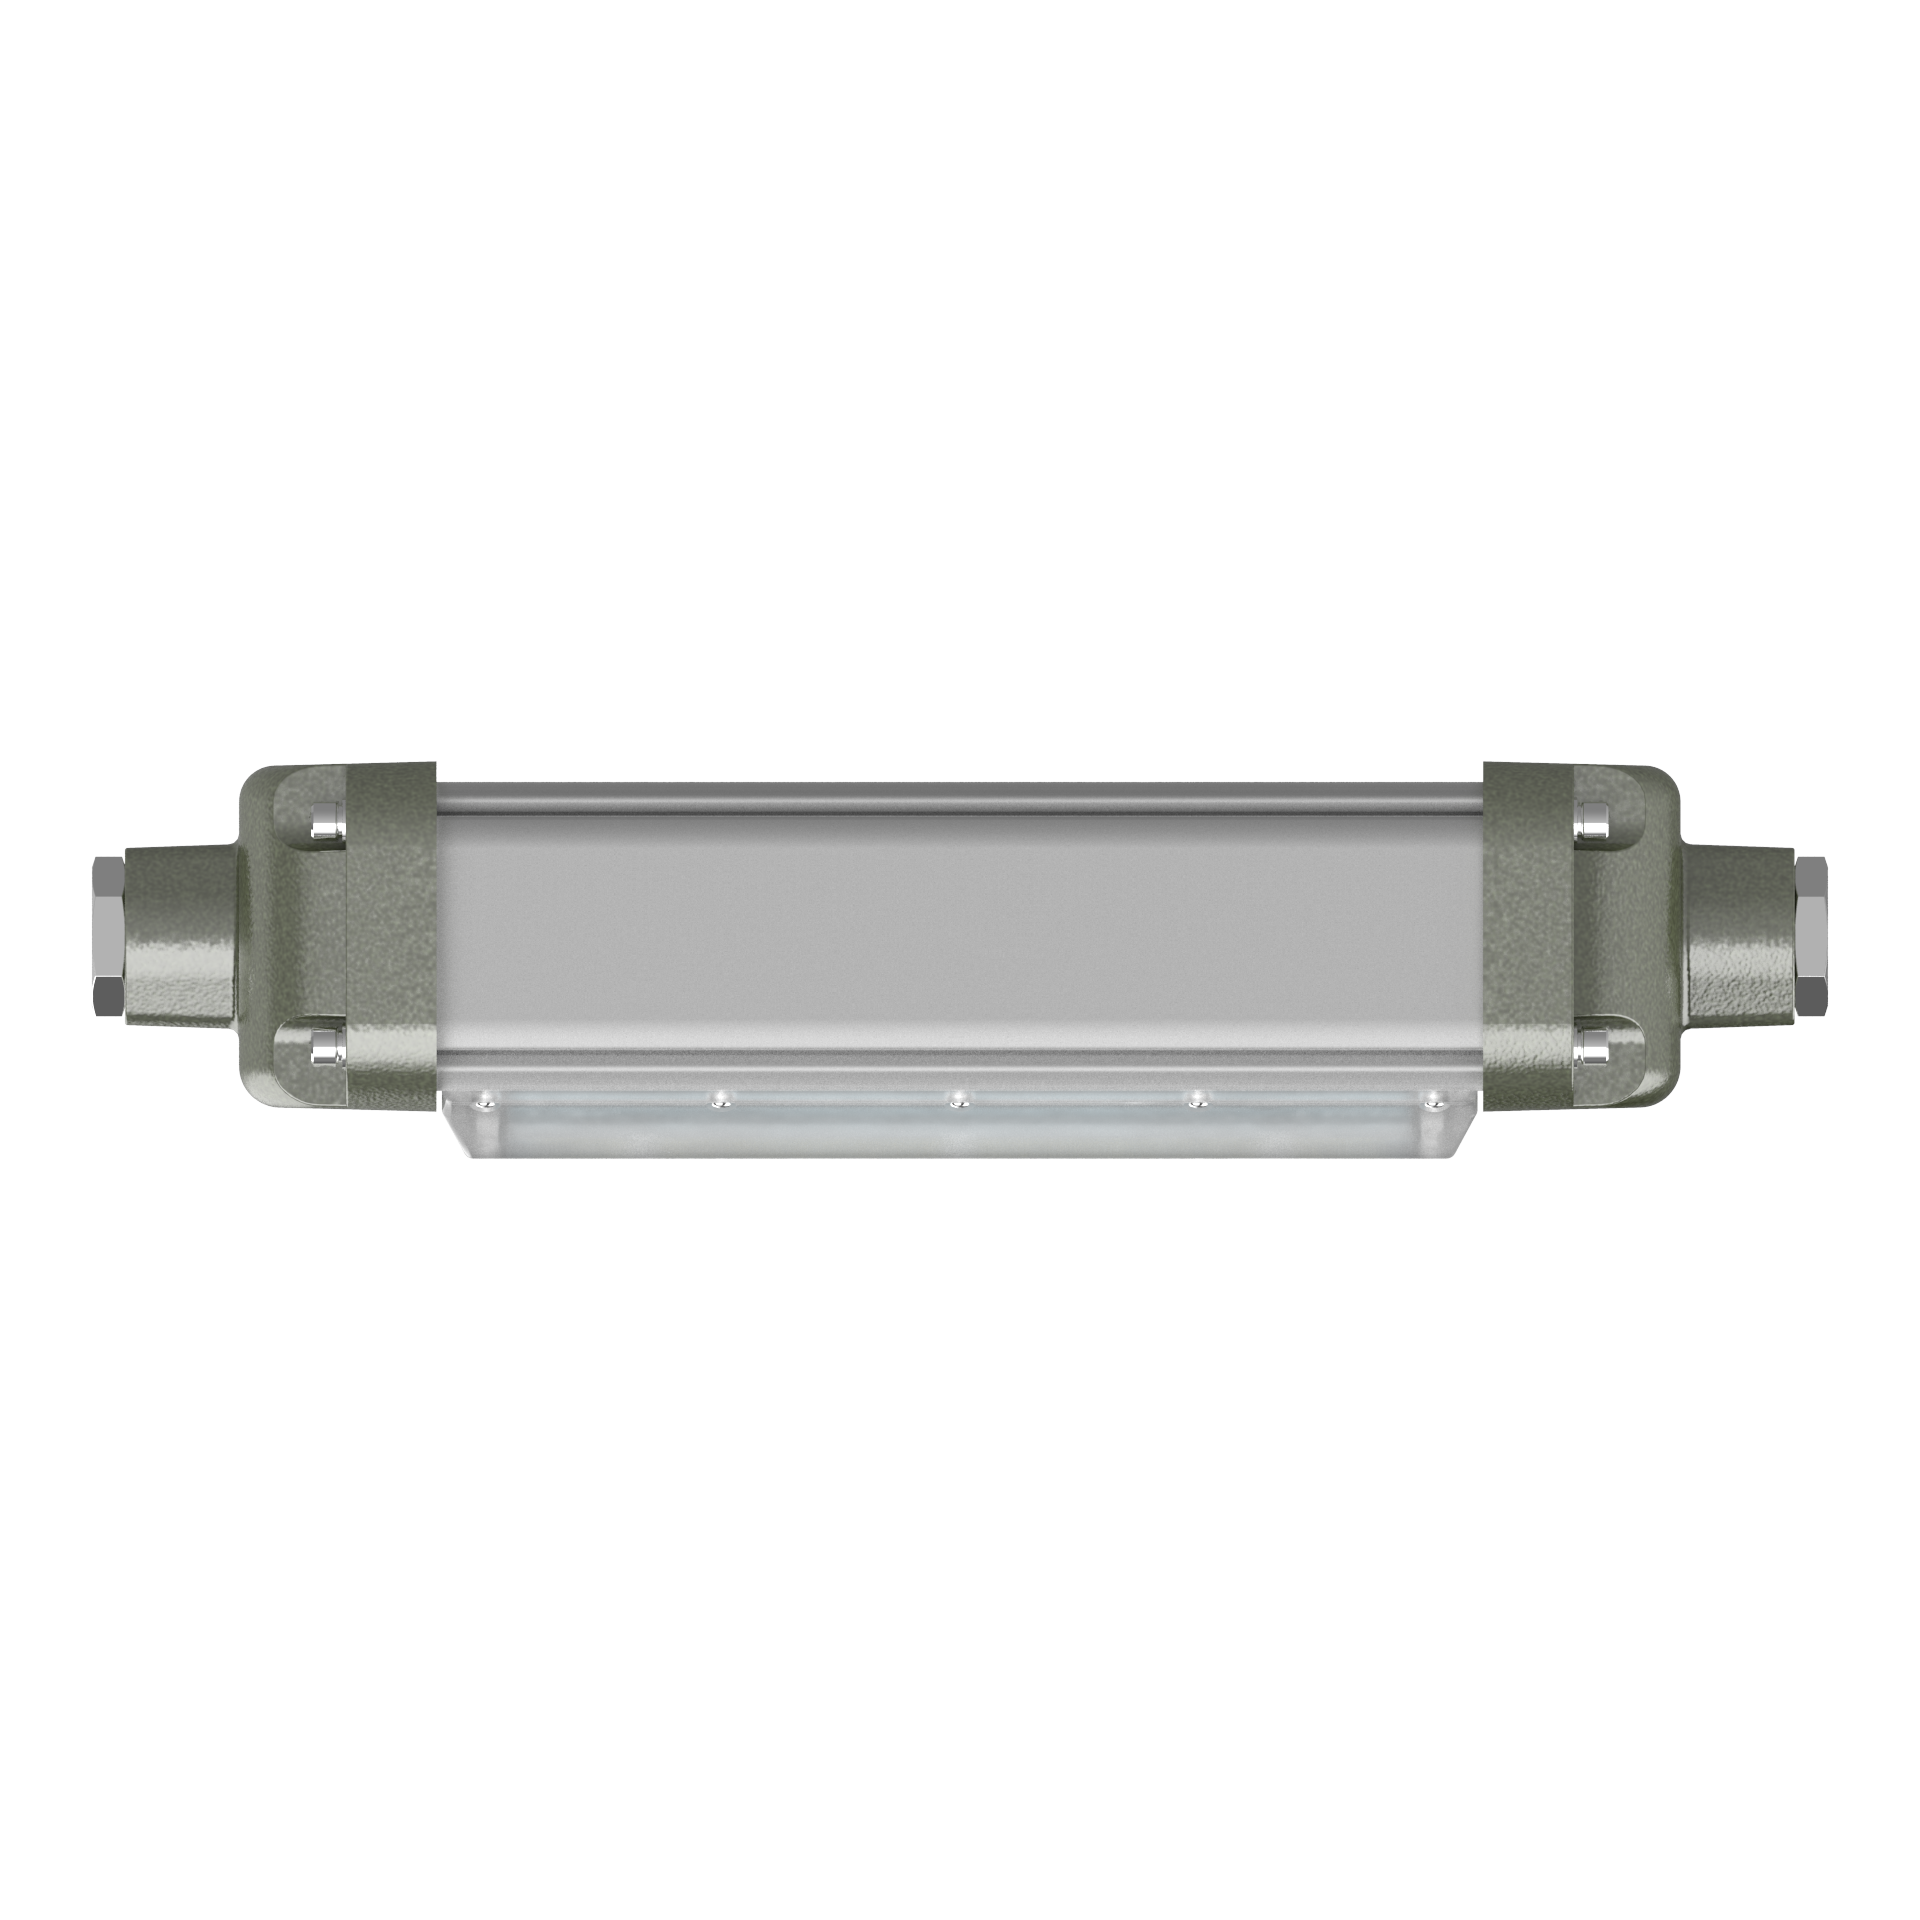 DOD52-300 10-40W LED线性防爆灯